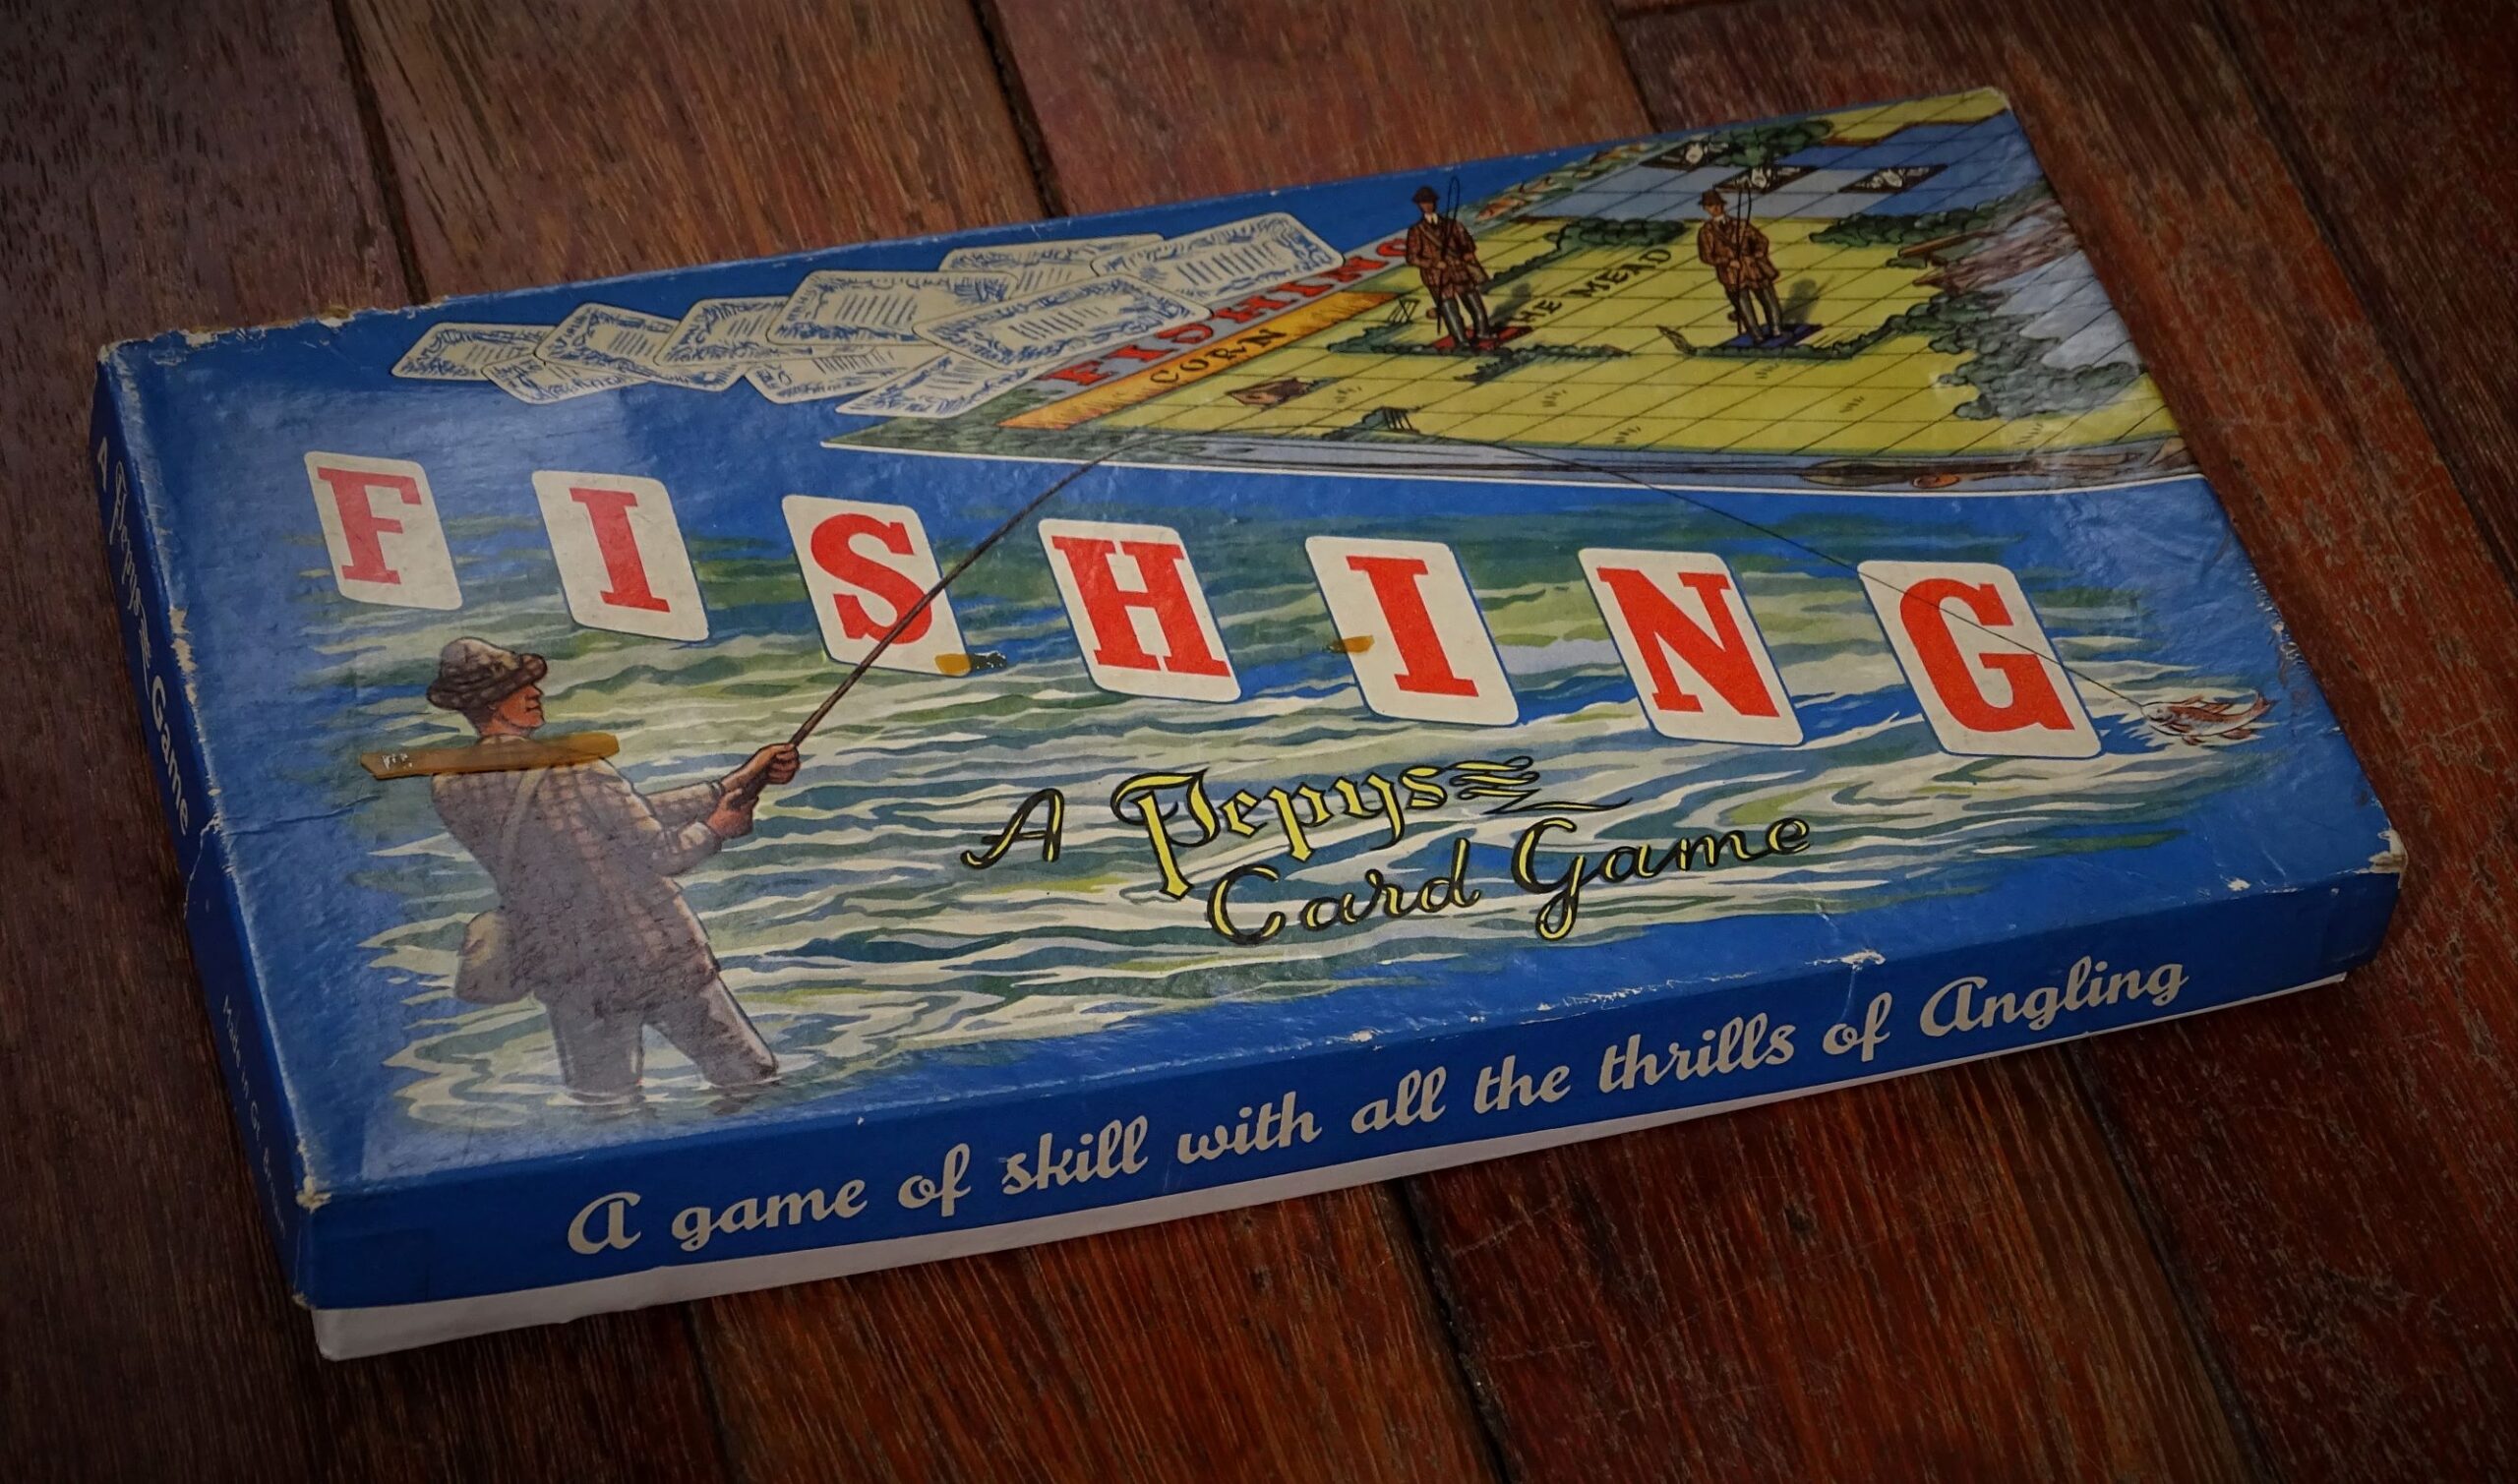 1953 Fishing - A Pepys Game, England - tomsk3000